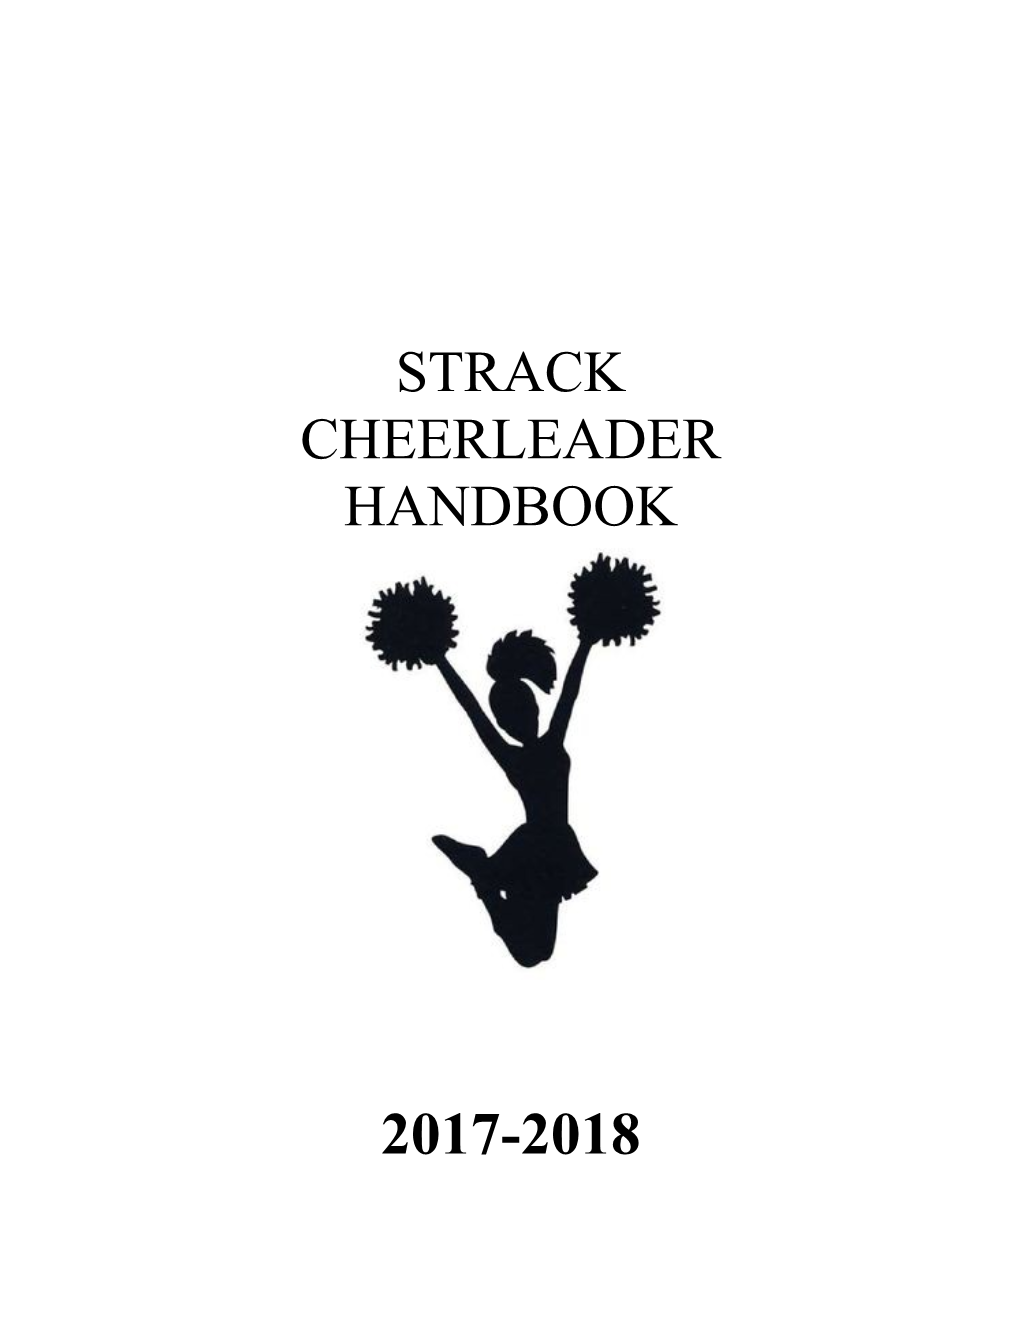 Cheerleader Handbook